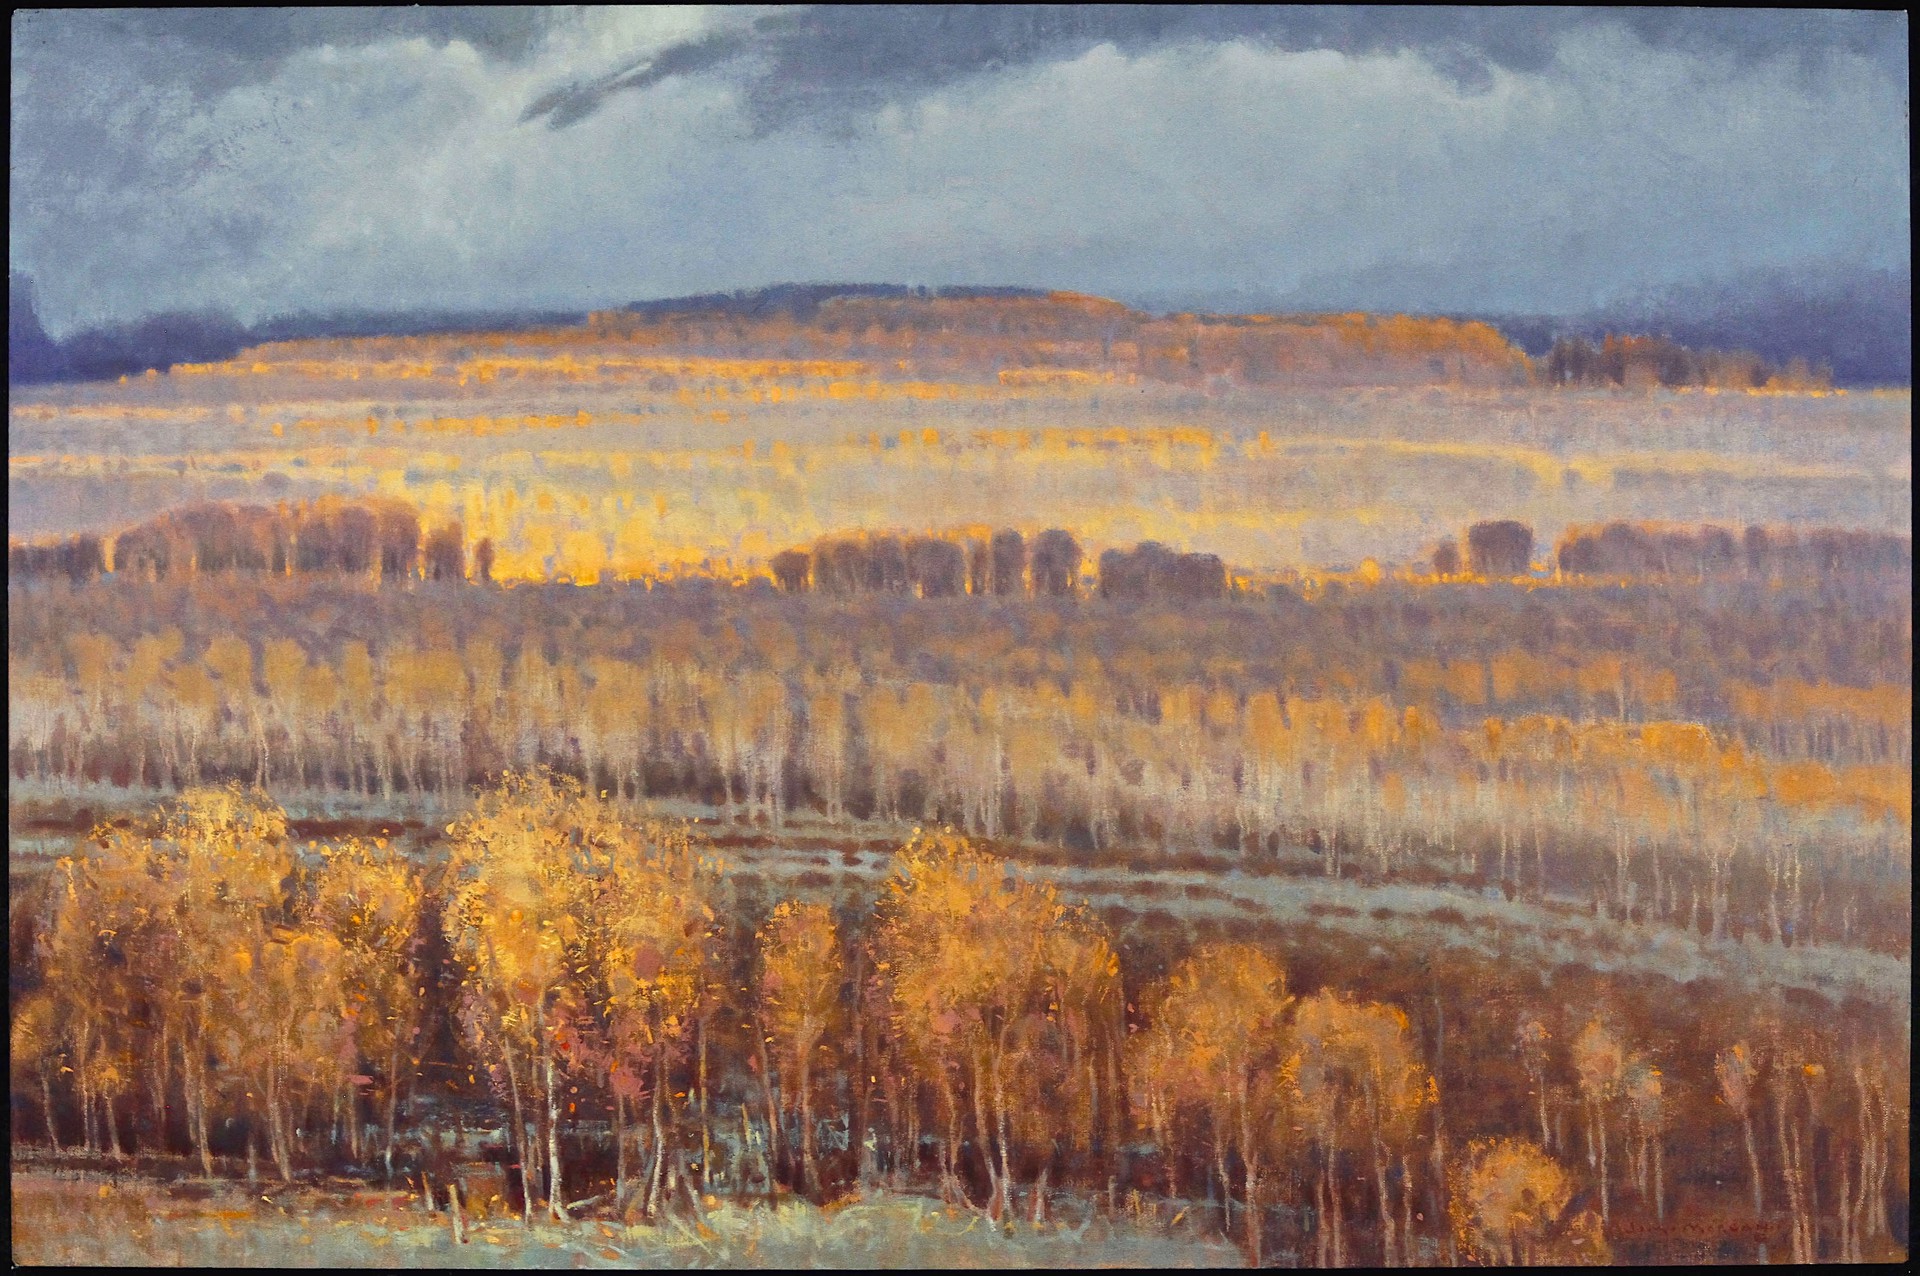 Autumn Patterns - Elk Country by Jim Morgan